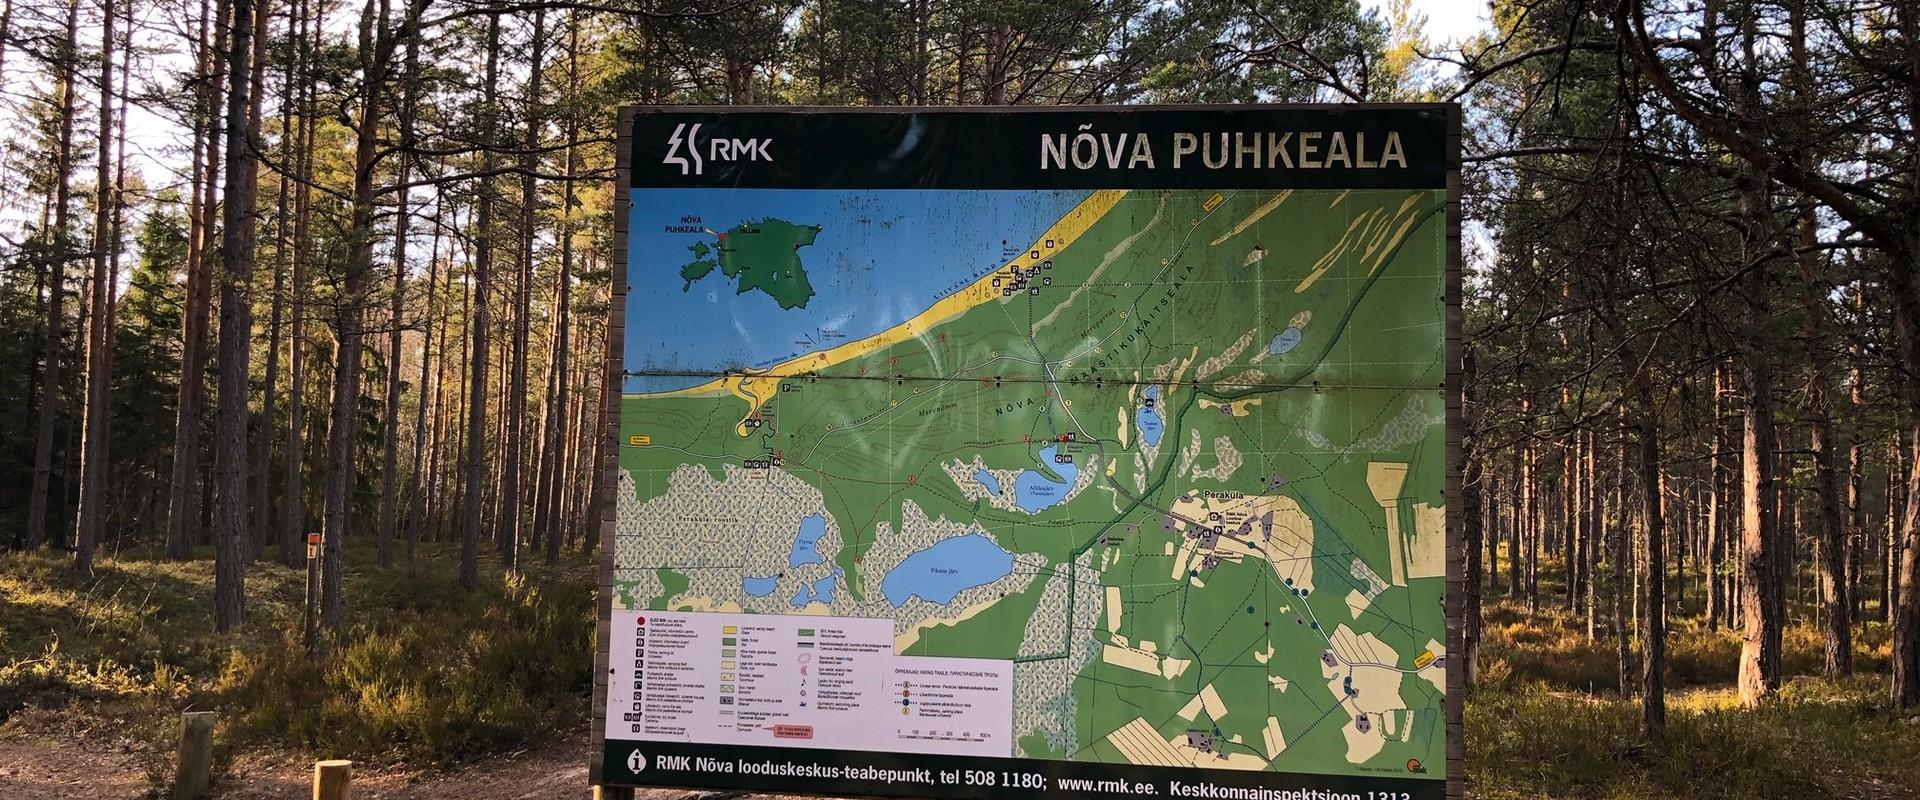 Nõva Nature Reserve, RMK Recreation Area, and Visitor Centre